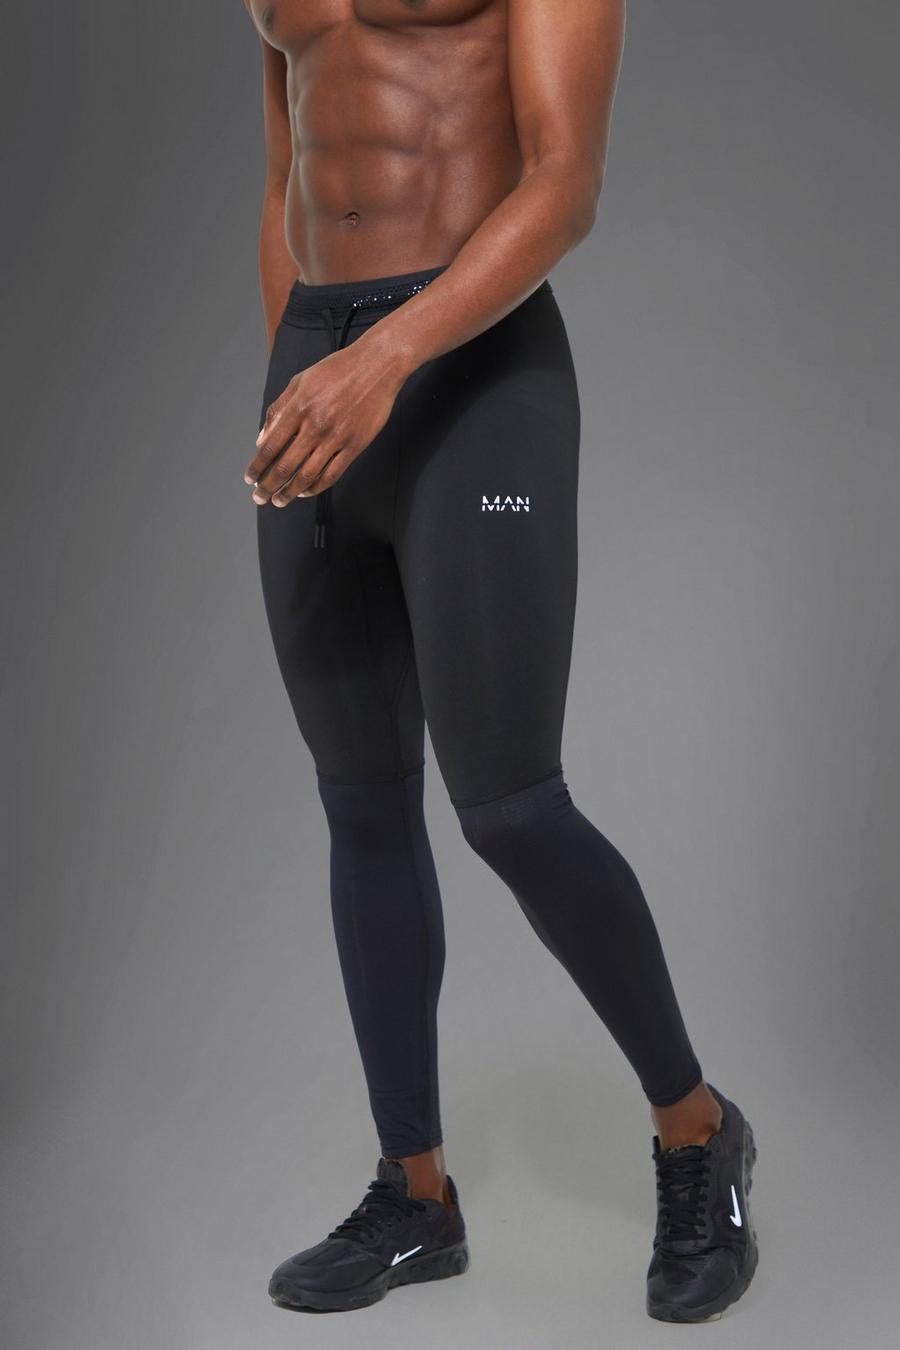 Legging de sport performance - MAN Active, Black